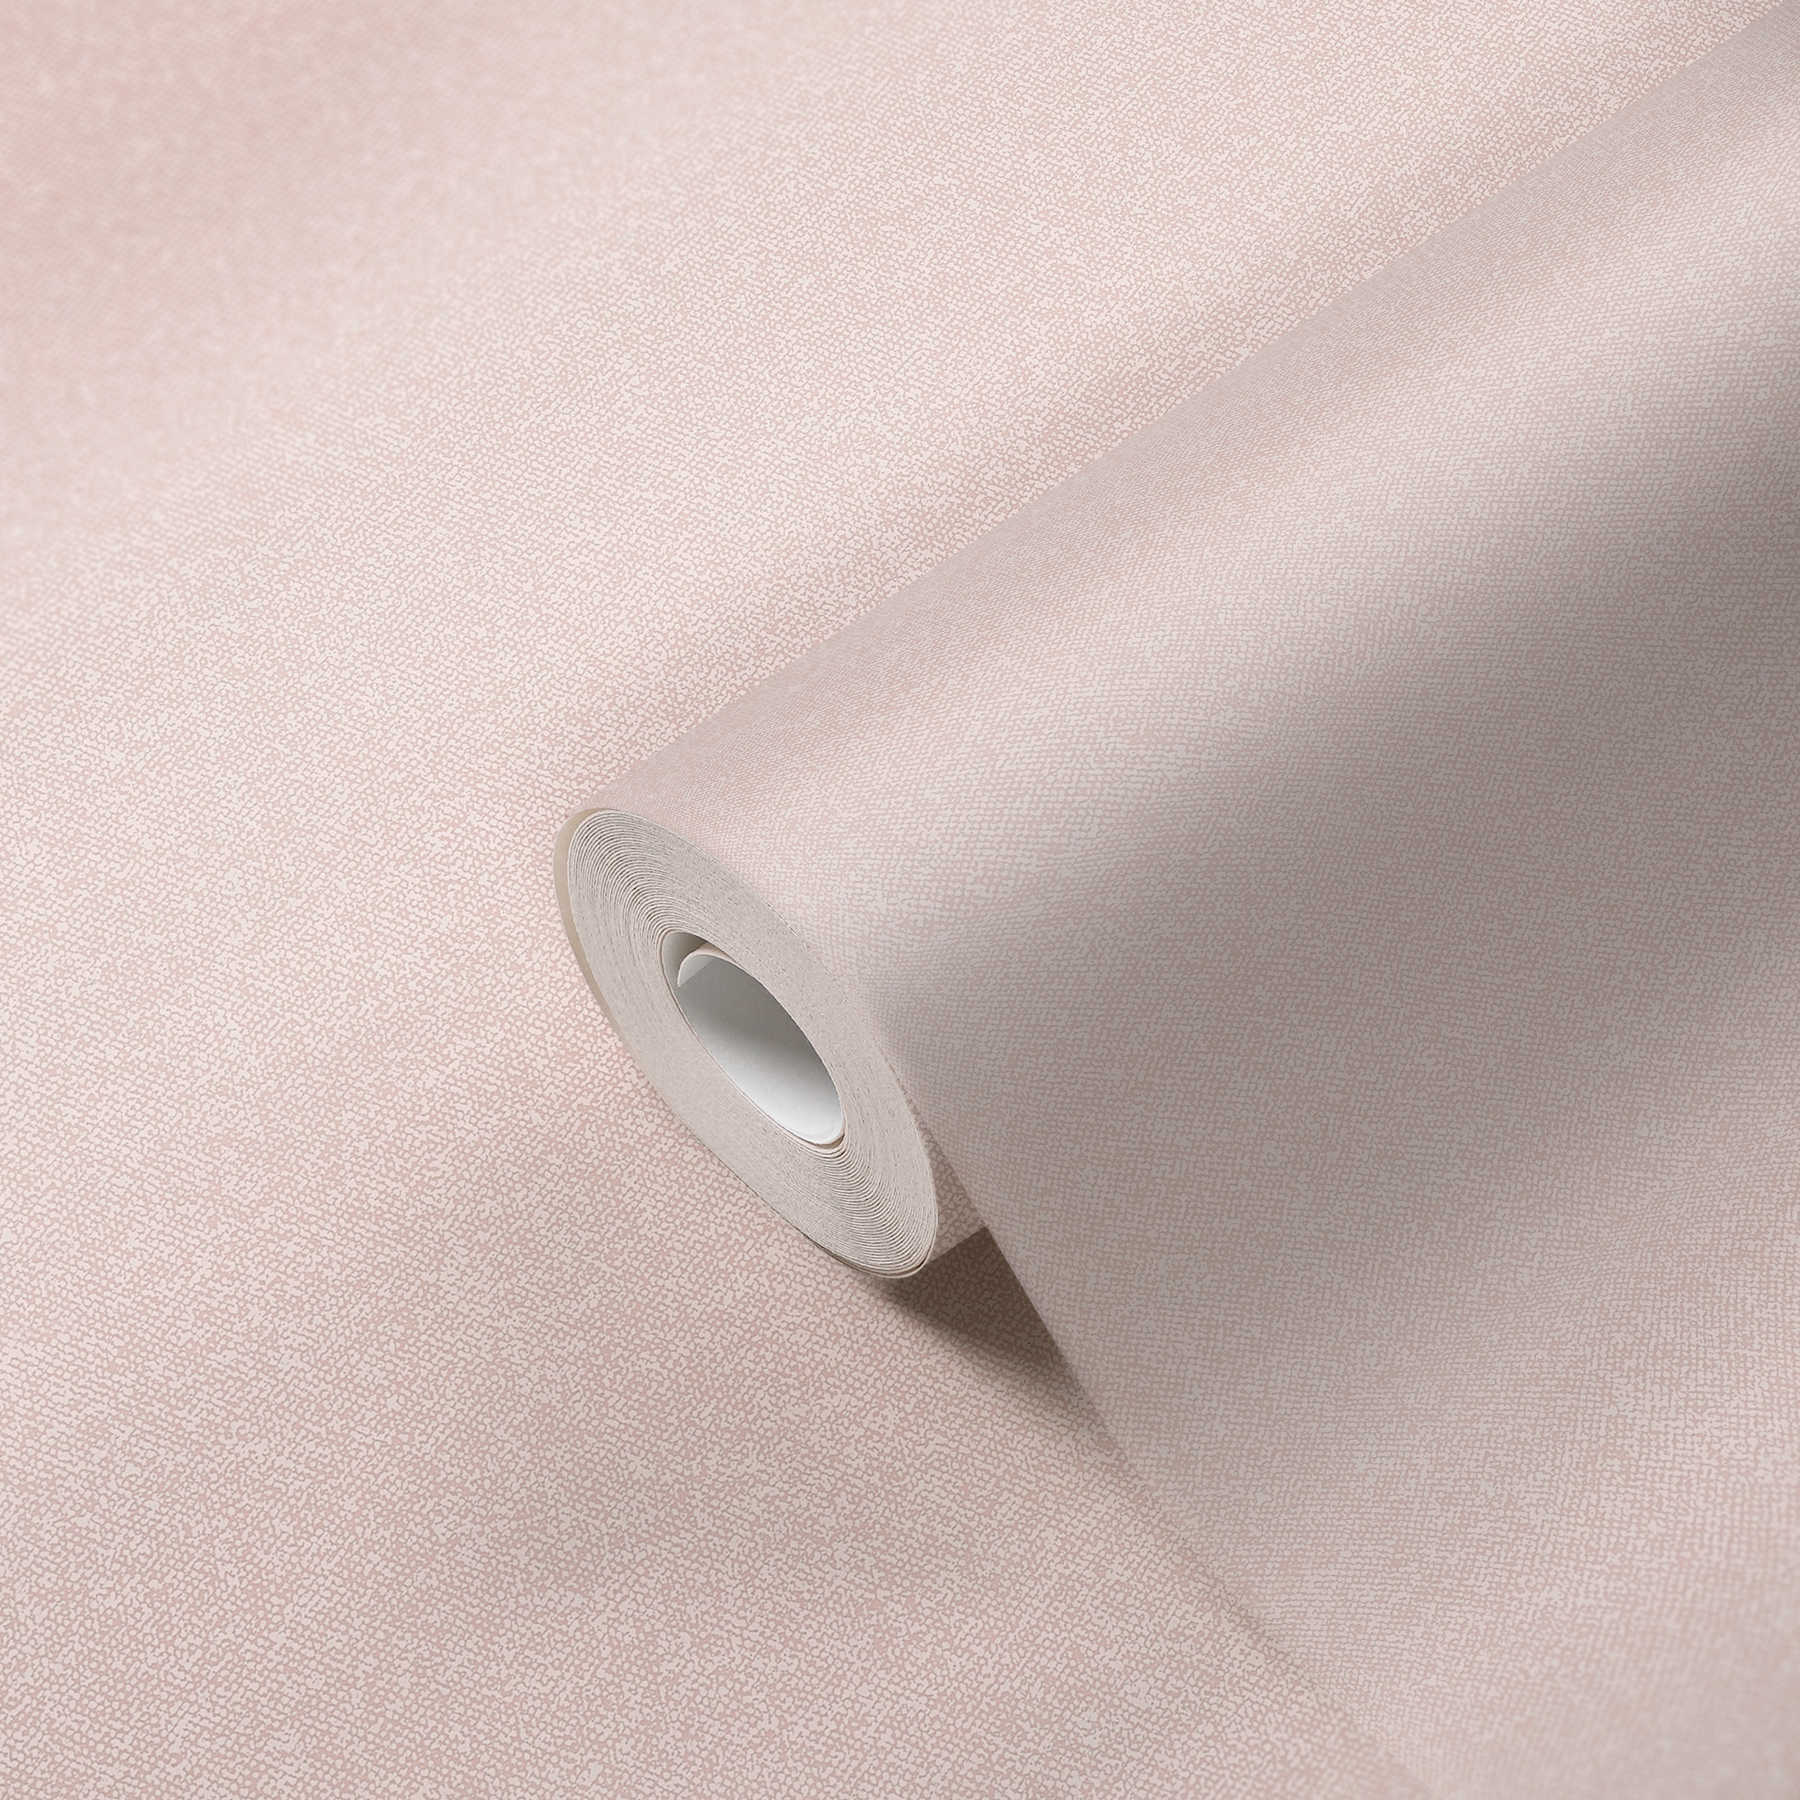             Carta da parati a tinta unita effetto tessuto - rosa, crema, bianco
        